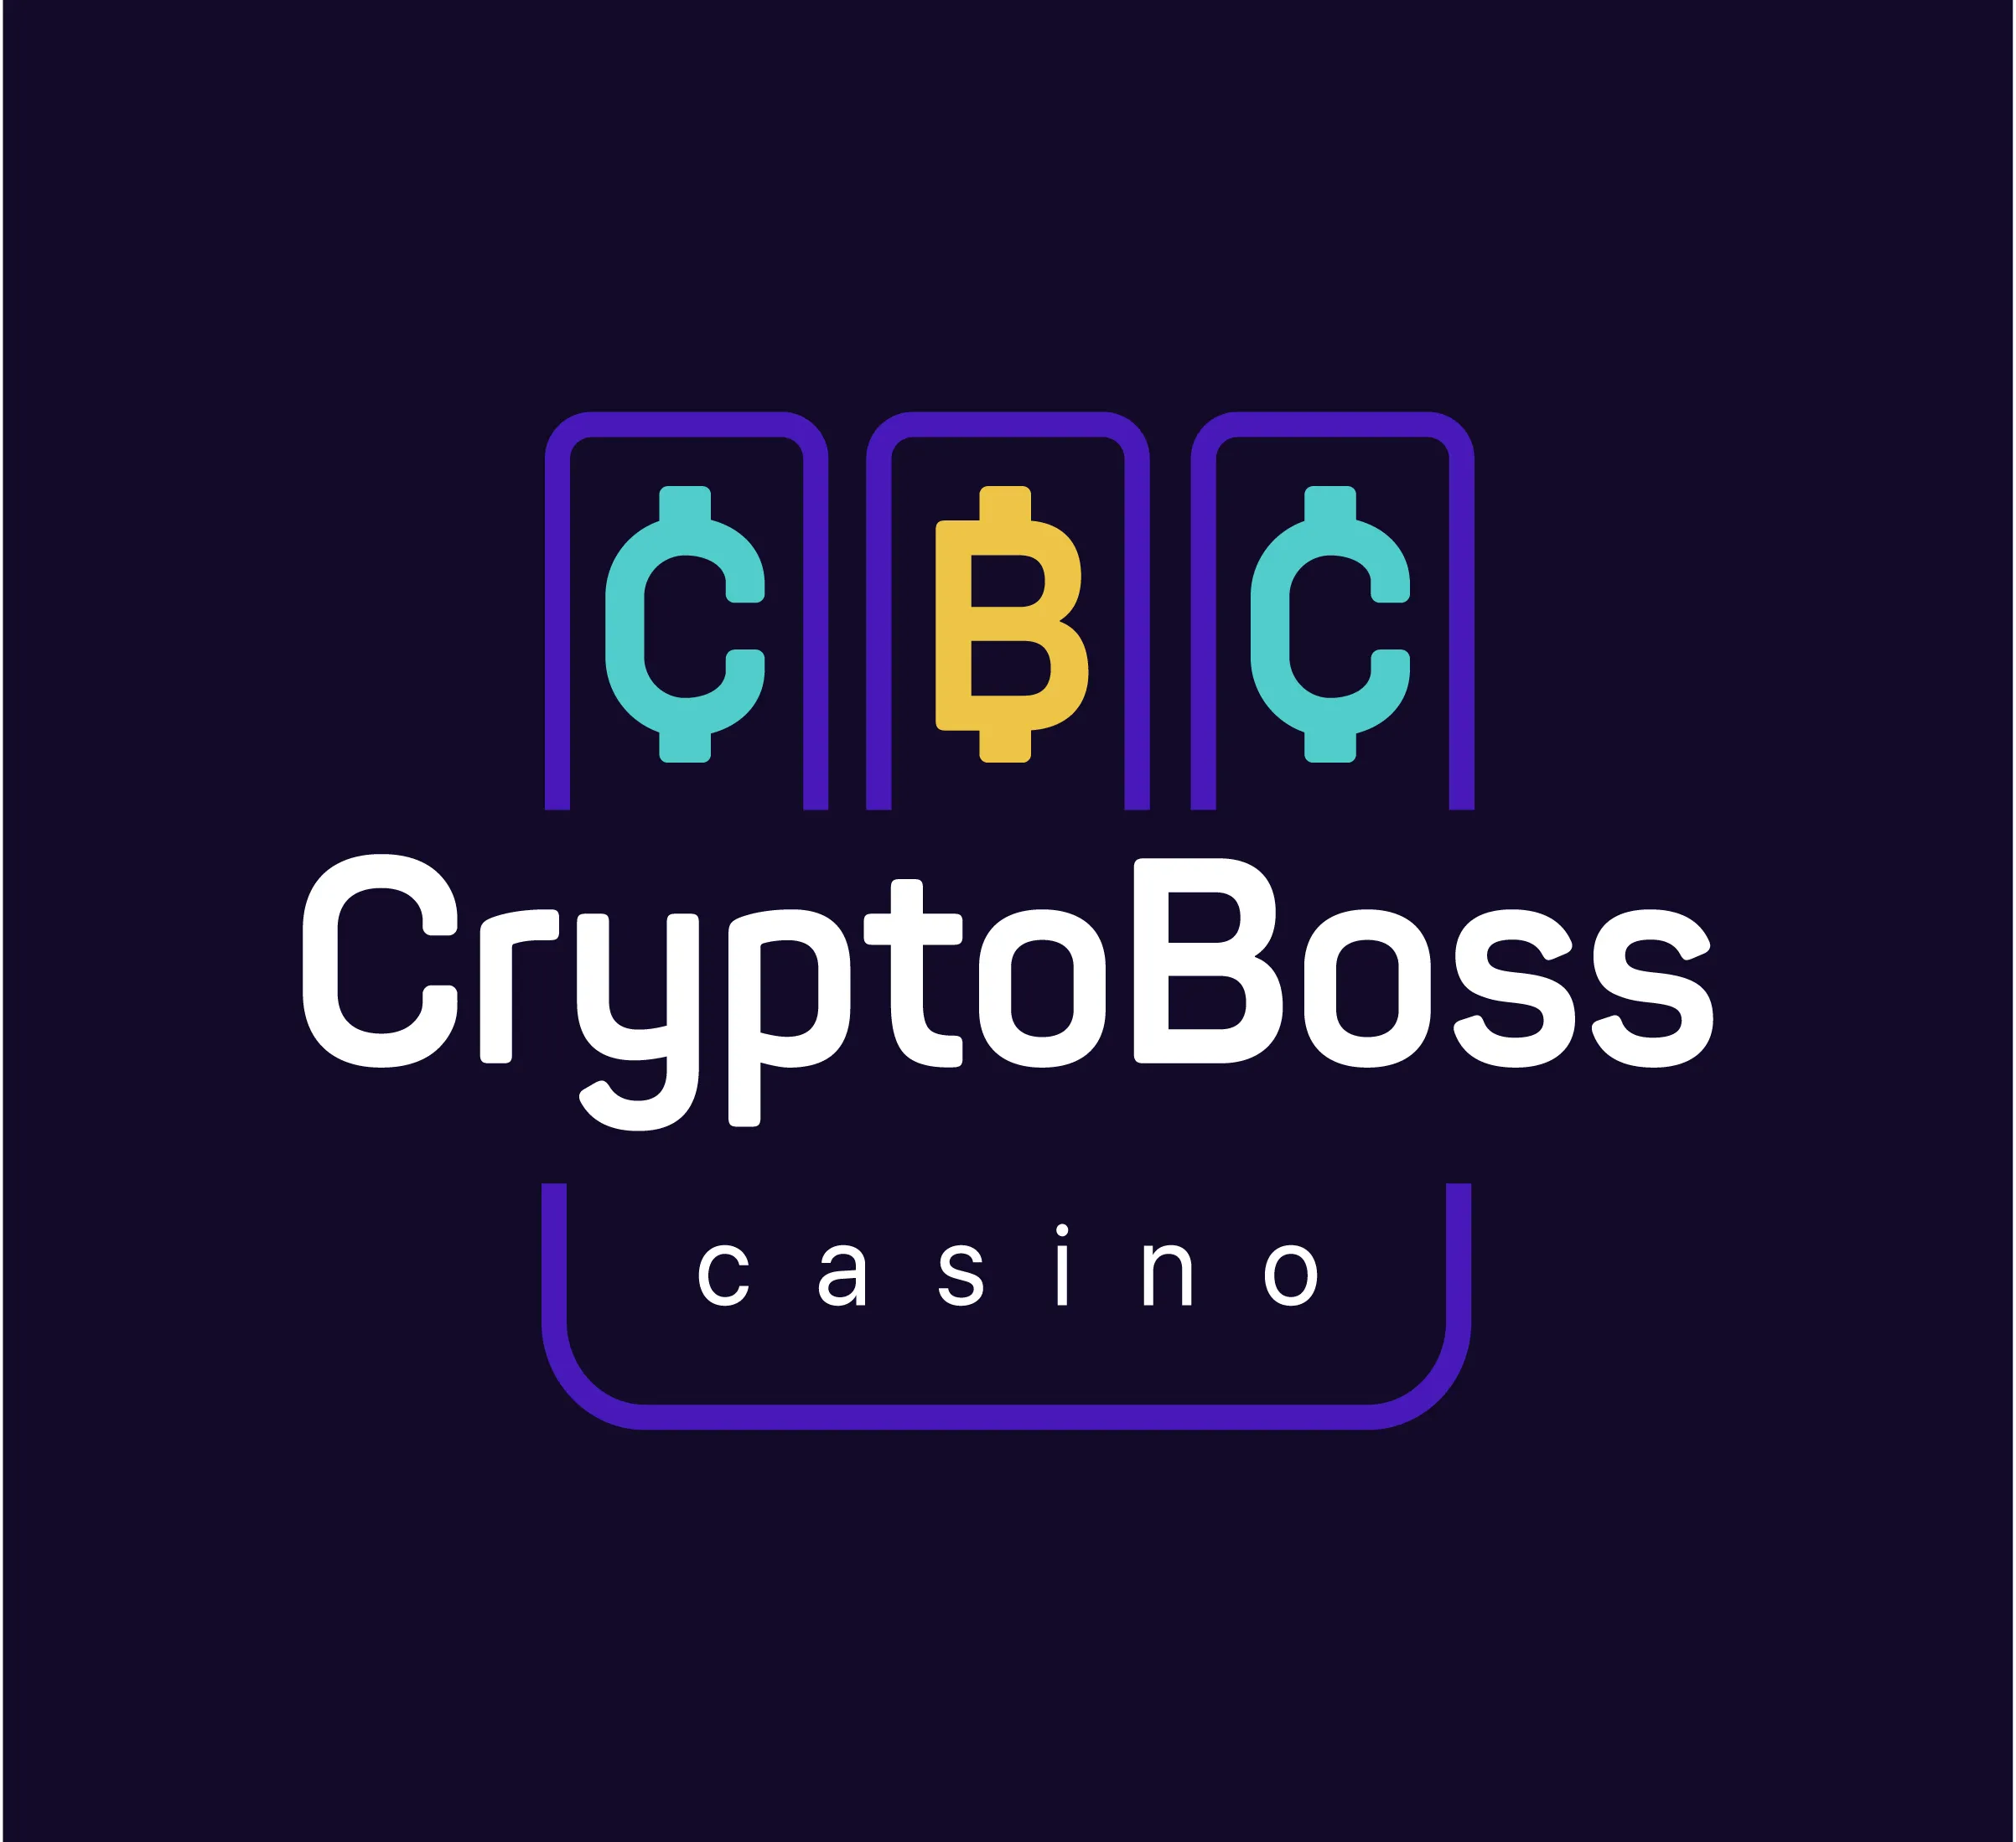 Crypto Boss casino